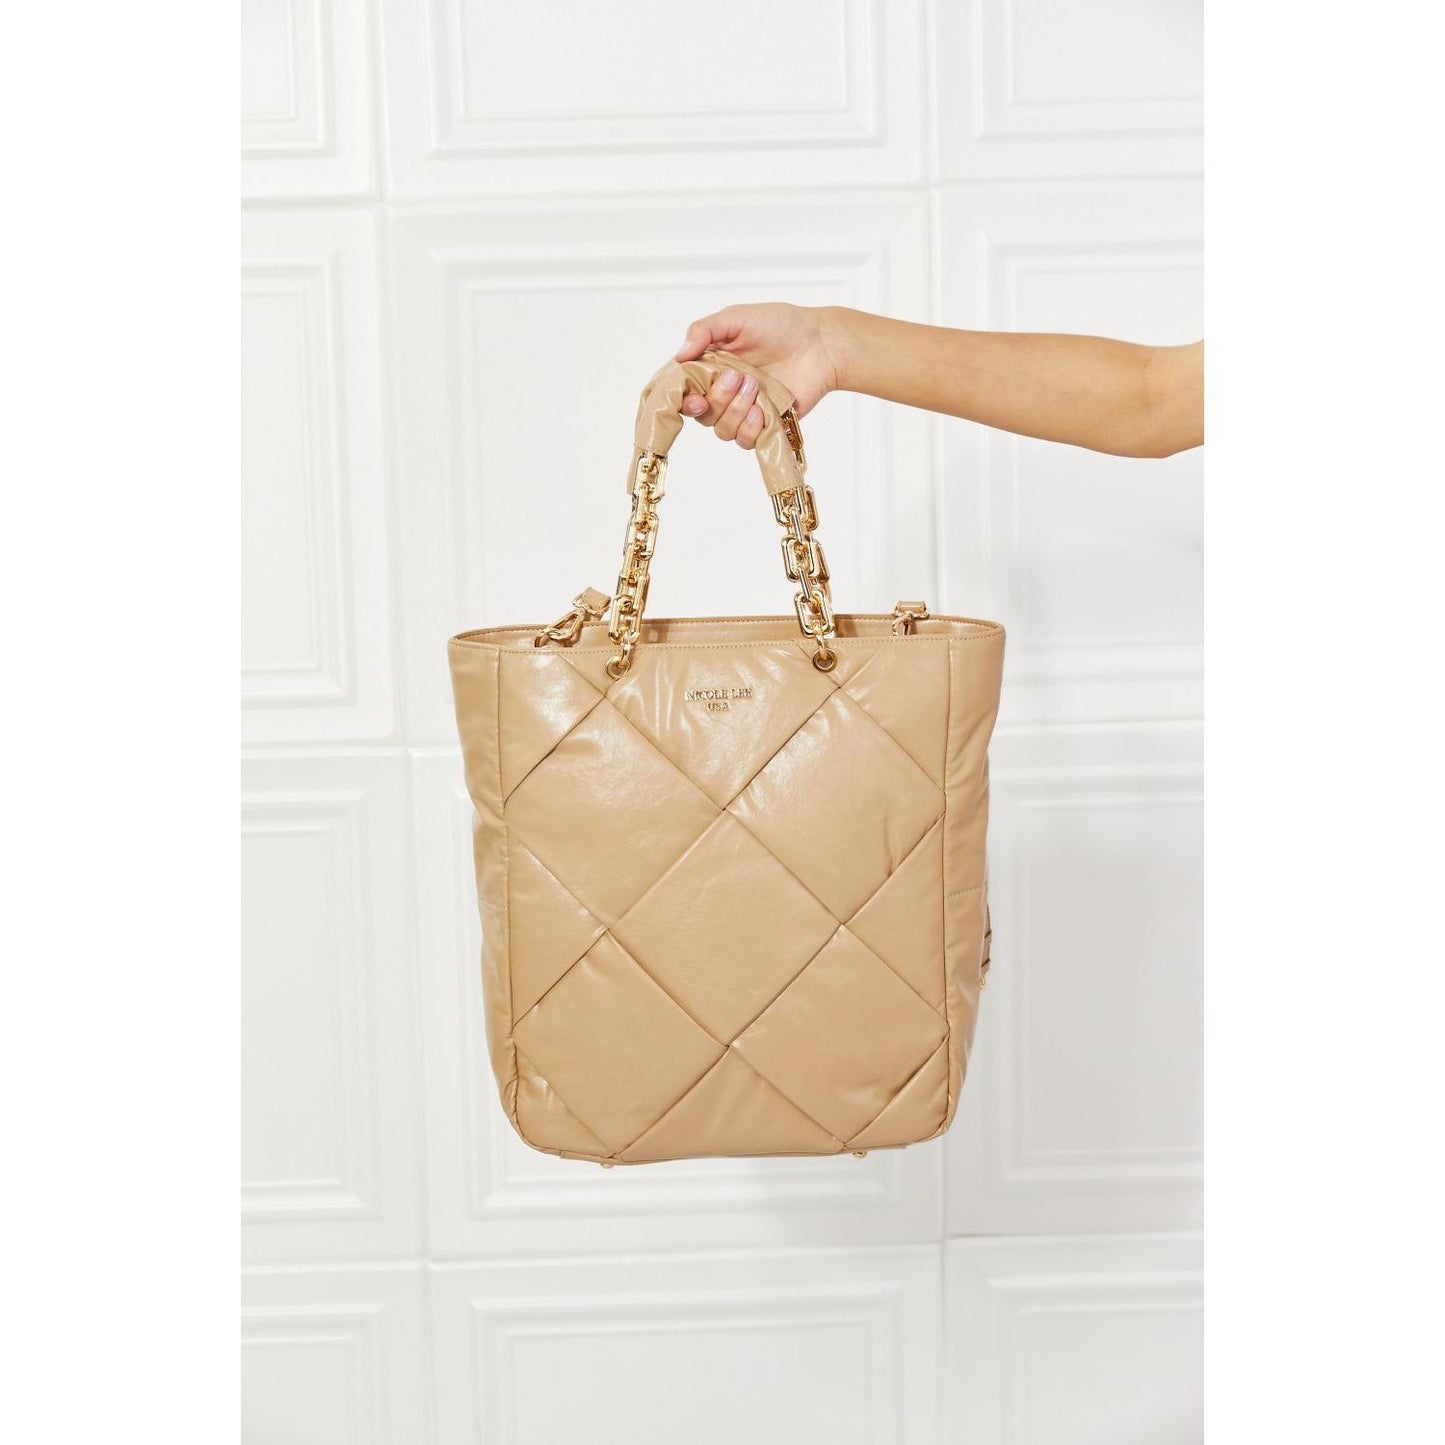 Nicole Lee USA Mesmerize Handbag - TiffanyzKlozet